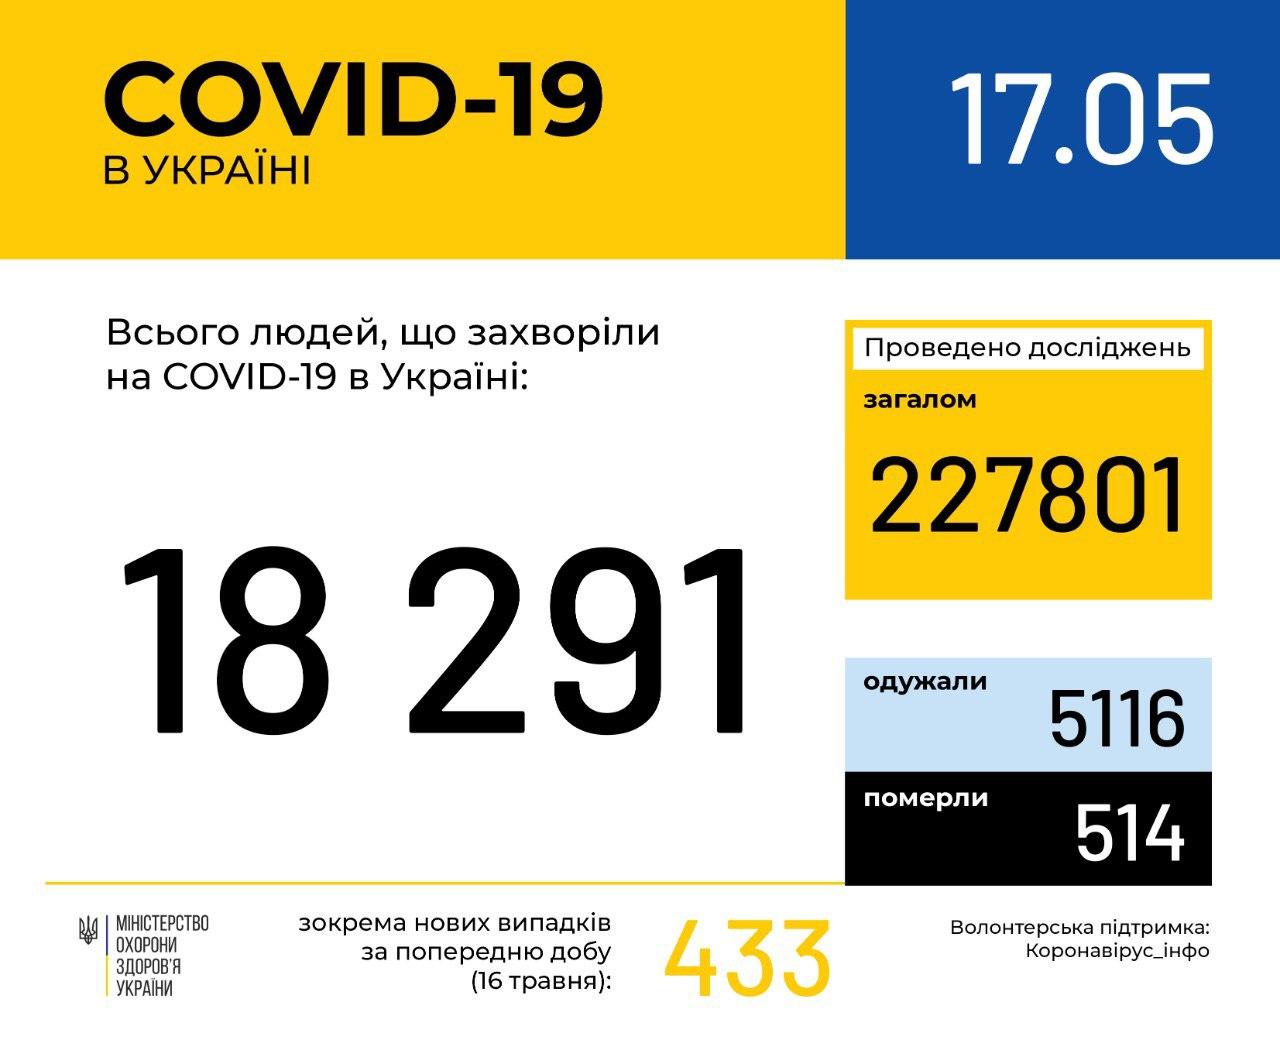 COVID-19, коровирус, сводка, Украина, Киев